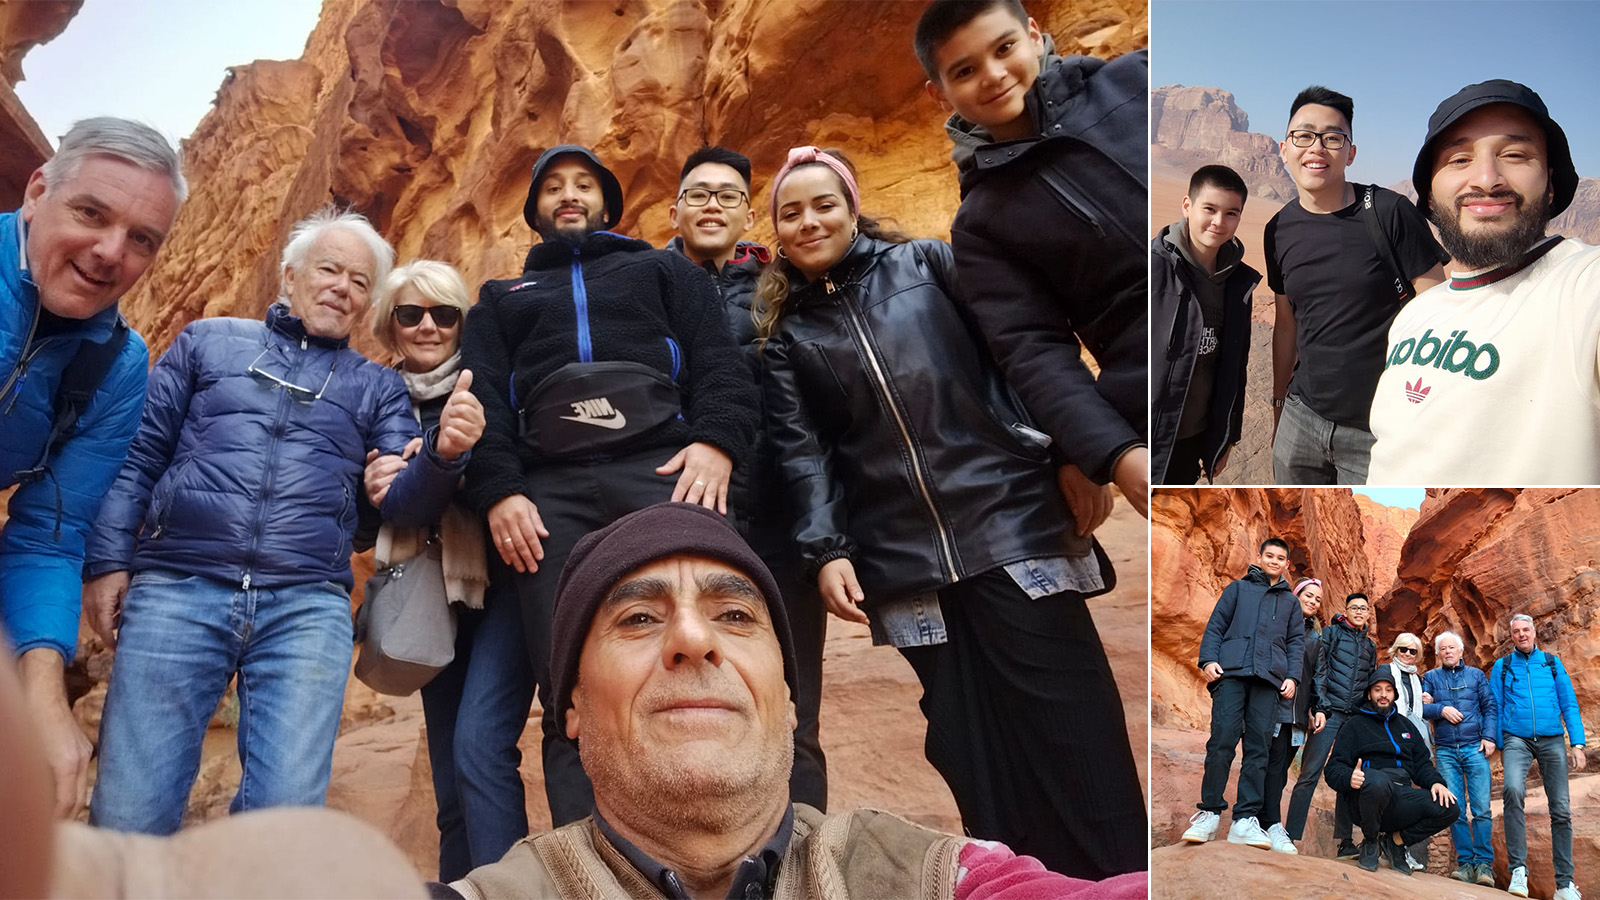 Brandon Wadi Rum tour group photos